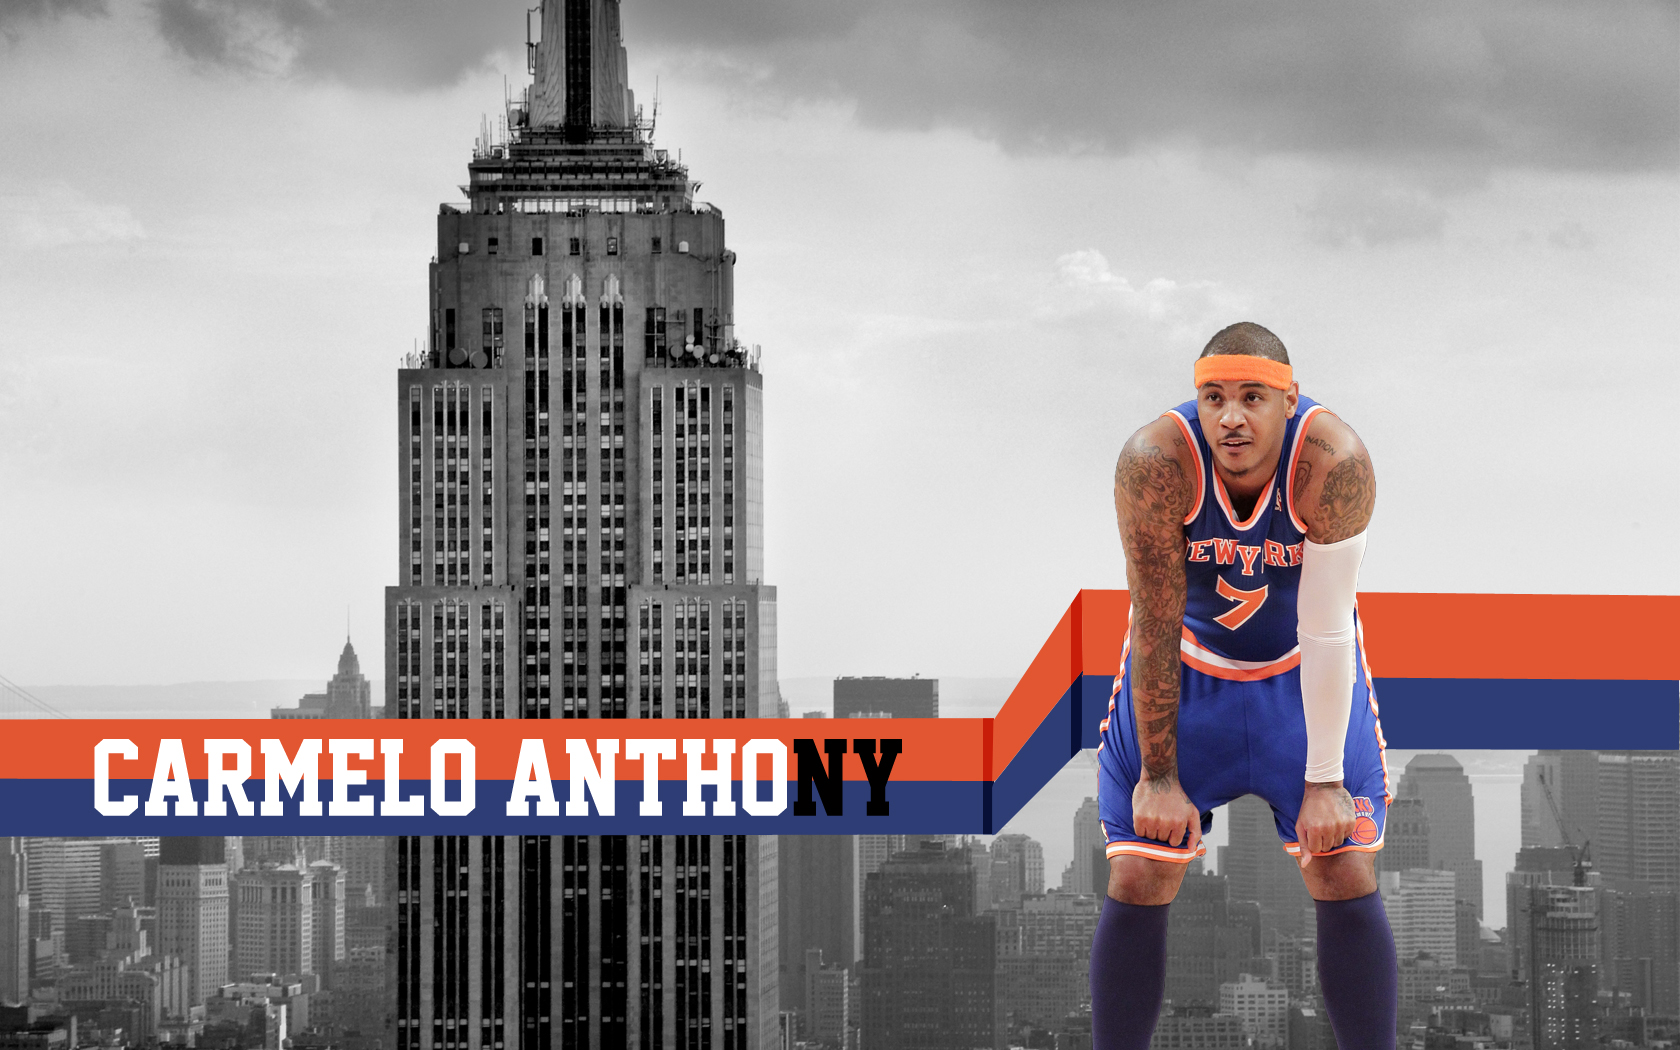 Baixar papéis de parede de desktop New York Knicks HD